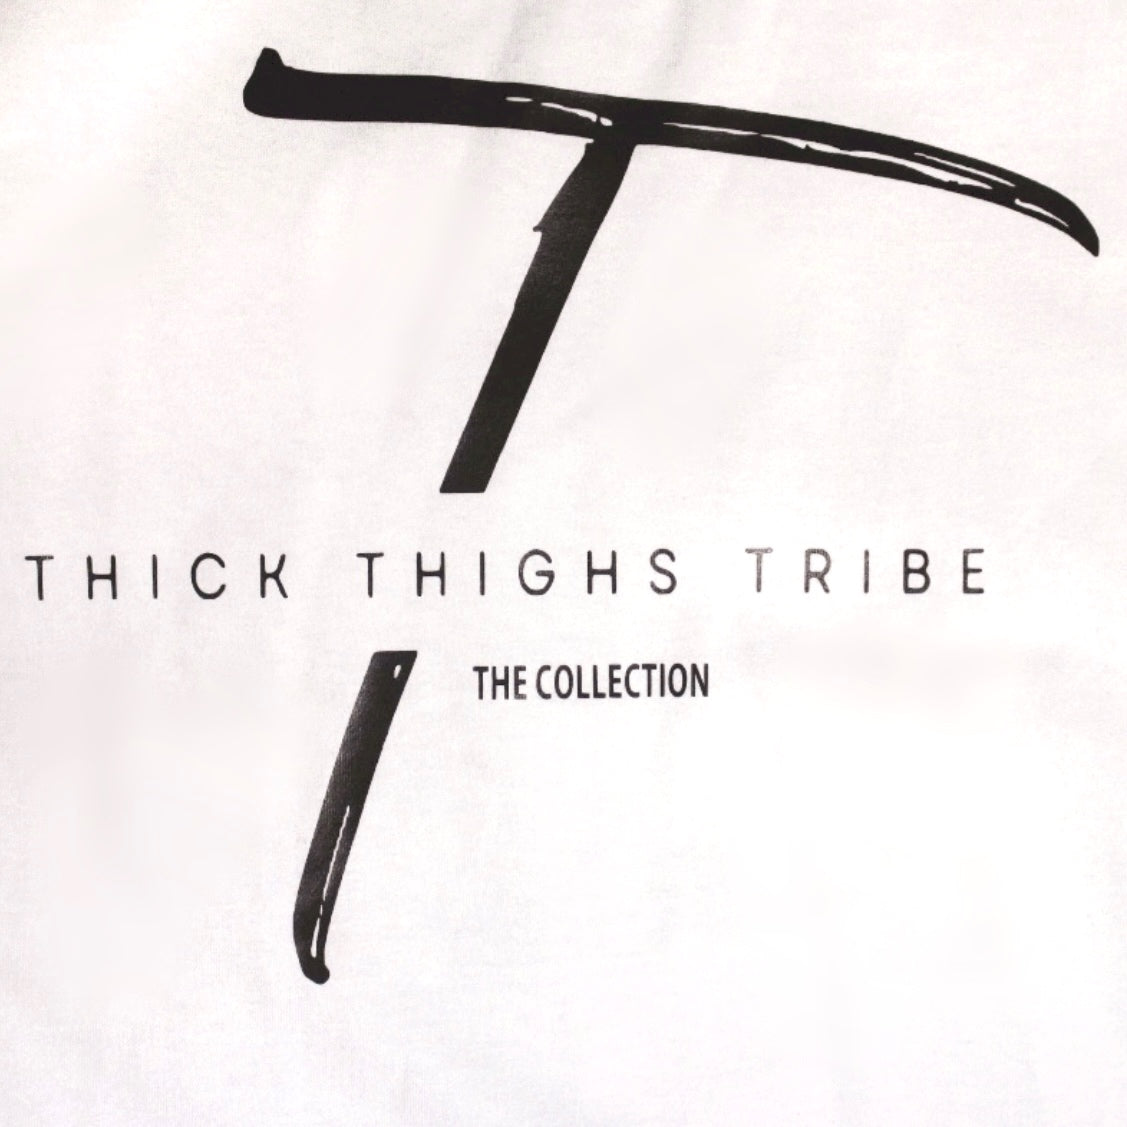 Thick Thigh Tribe Tee - White x Black